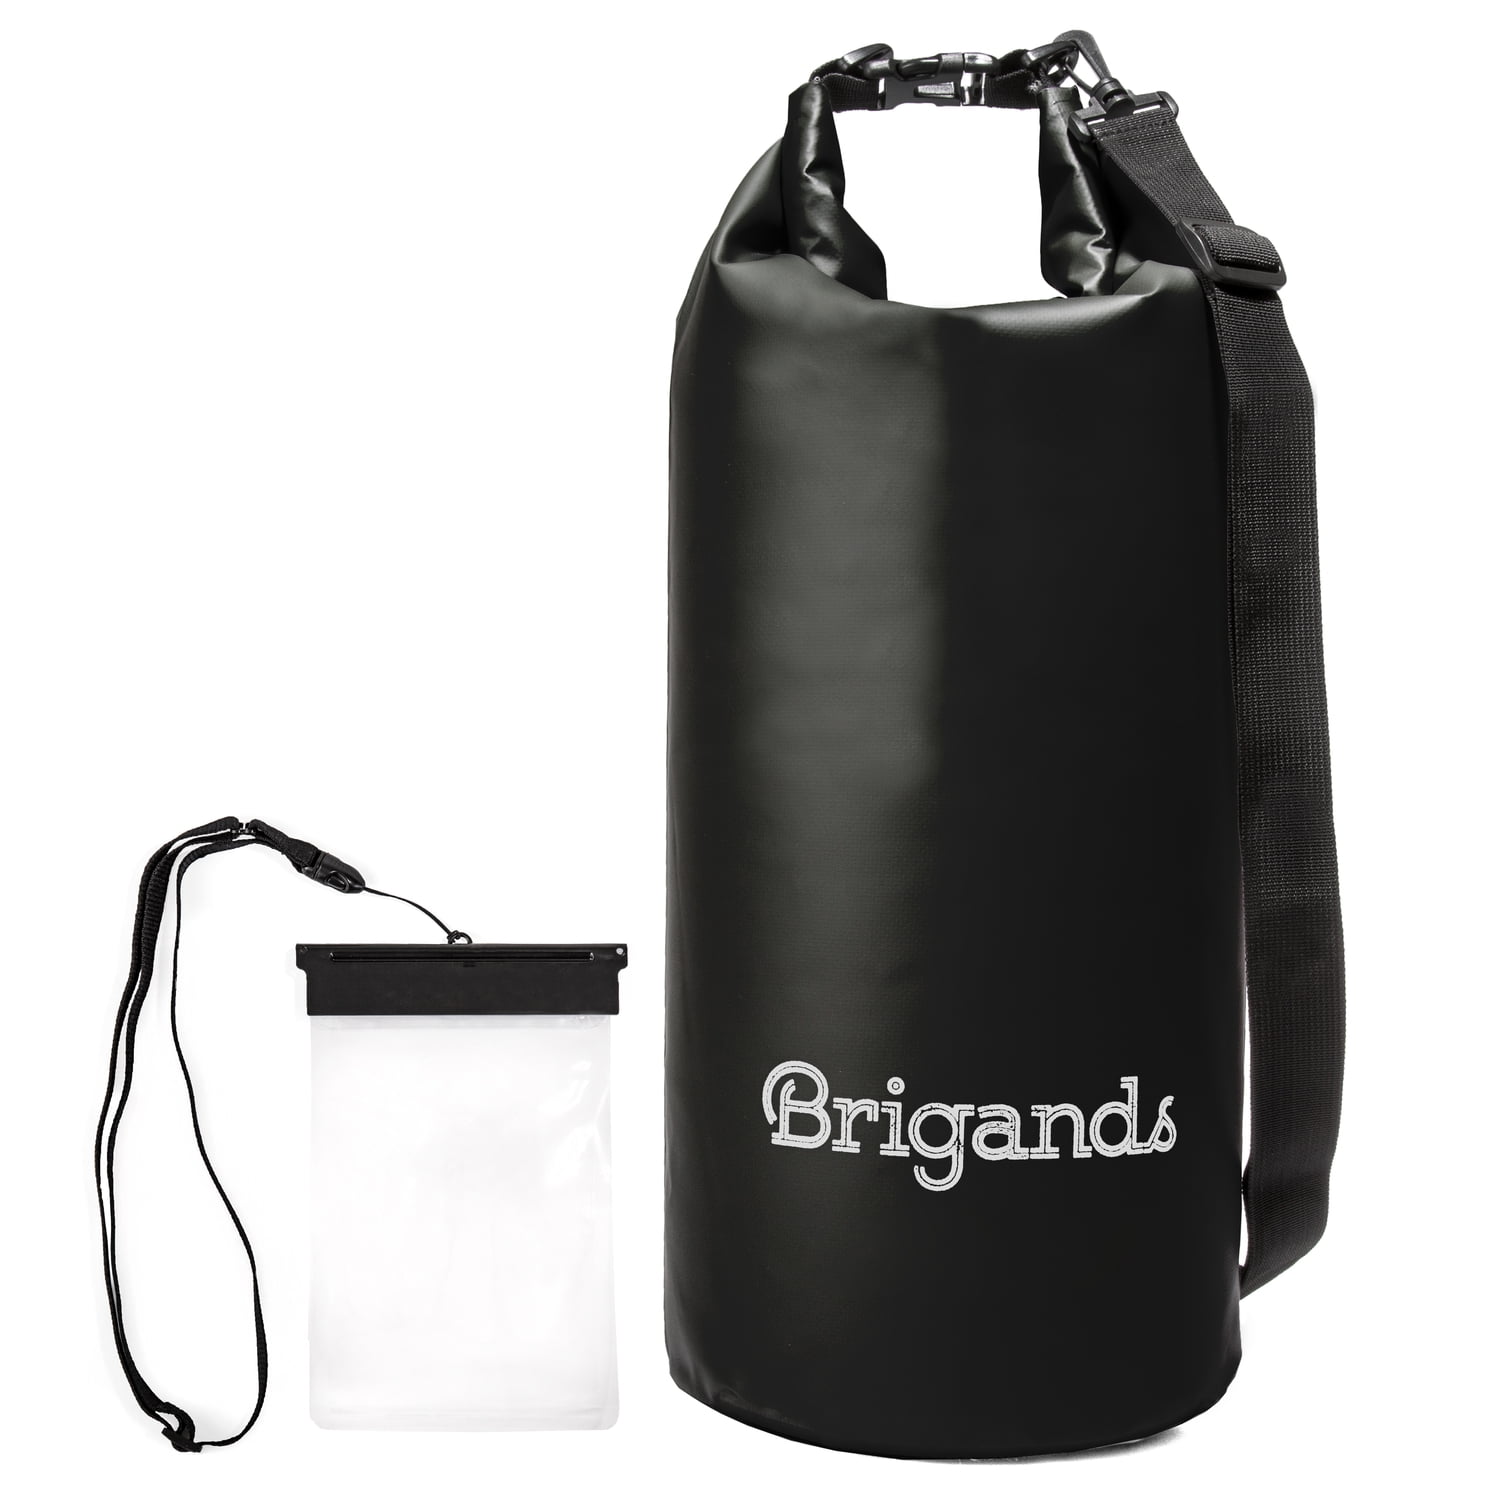 TOMSHOO 10L Outdoor Dry Bag Sack Storage Bag With Waterproof Phone Case F1W0 